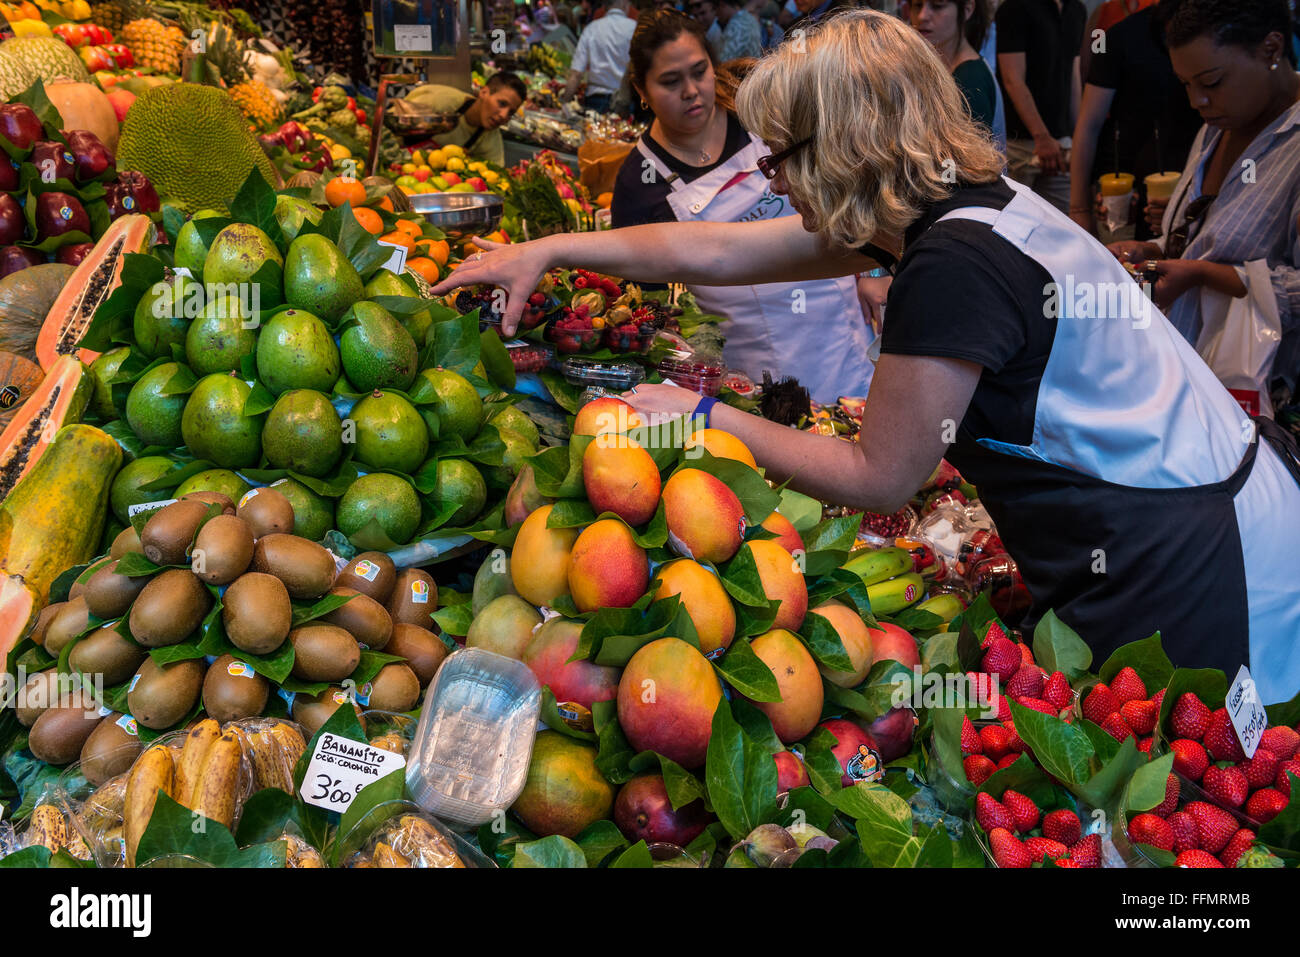 fruits for sale at Mercat de Sant Josep de la Boqueria - famous public market, Ciutat Vella district, Barcelona, Spain Stock Photo